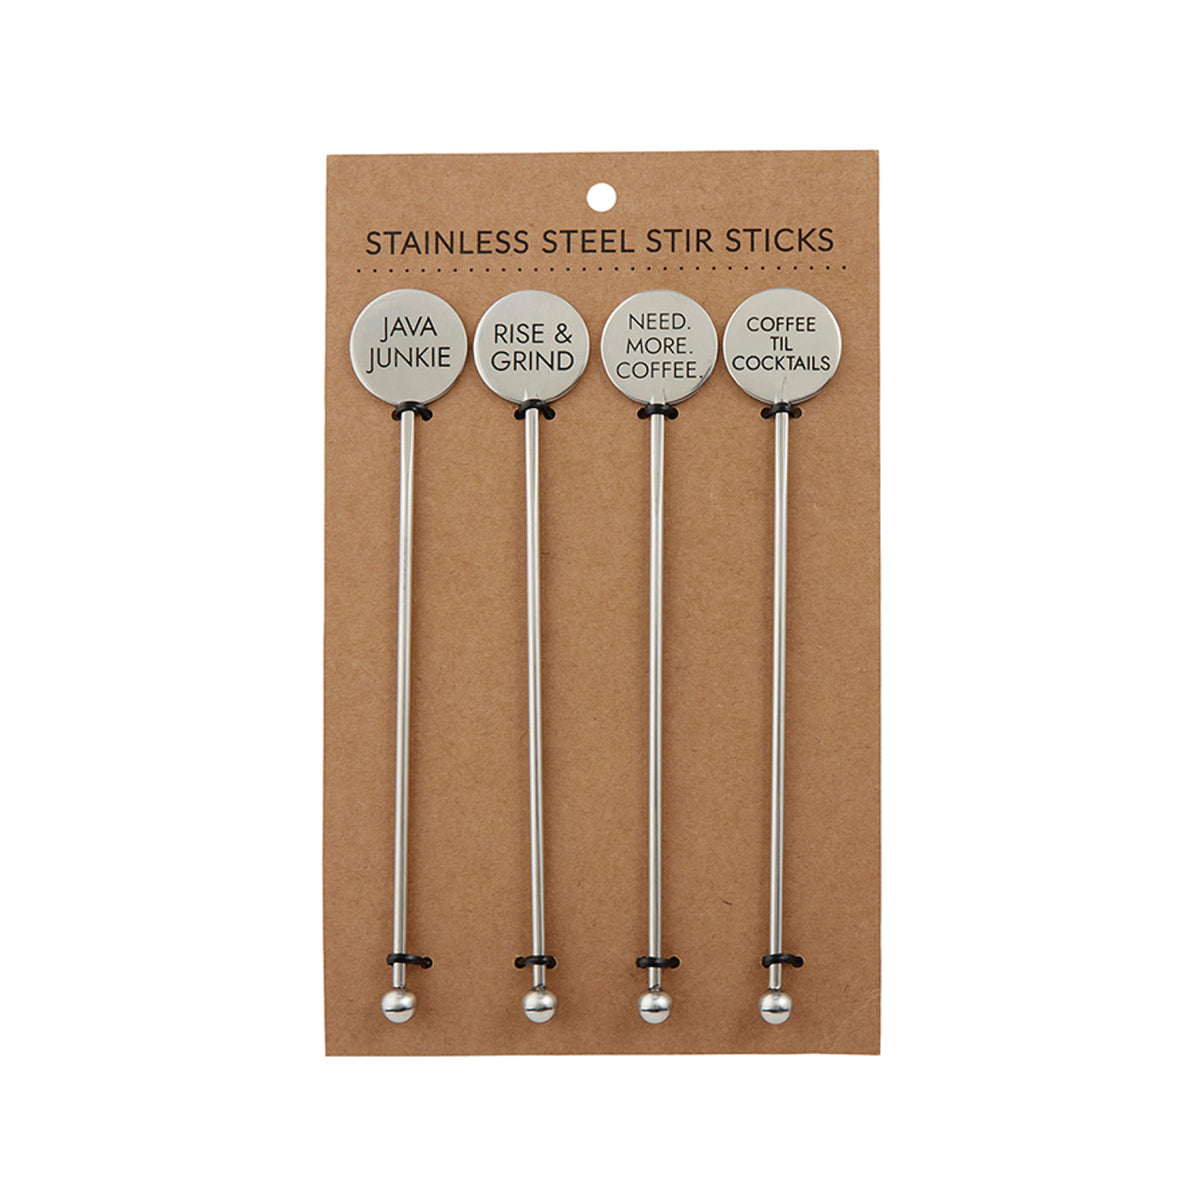 Christian Brands F3735 Coffee-Stainless Steel Stir Sticks - Pack of 2